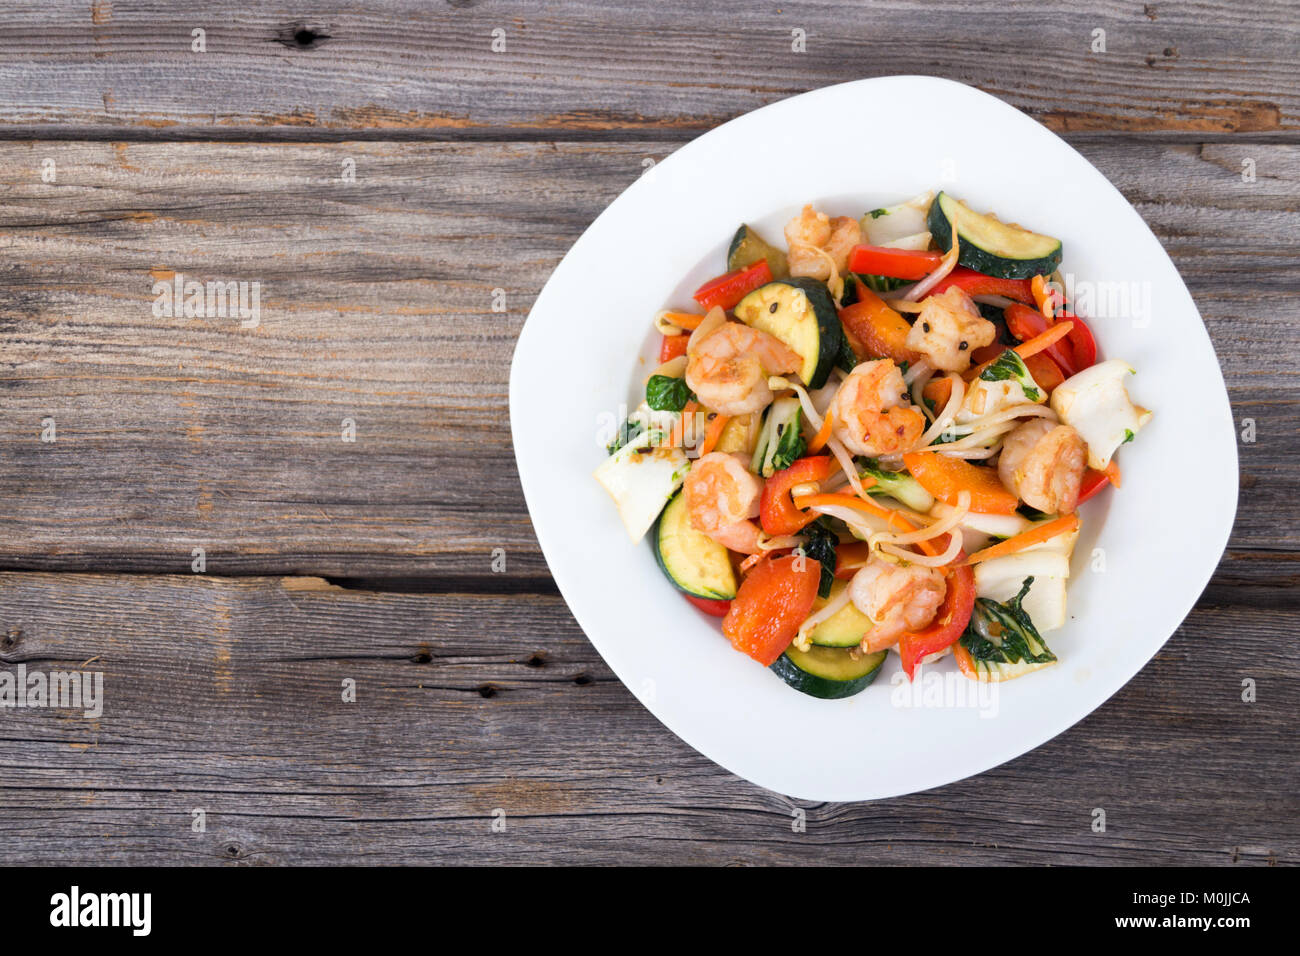 Shrimp stir fry  with vegetables over wood background Stock Photo